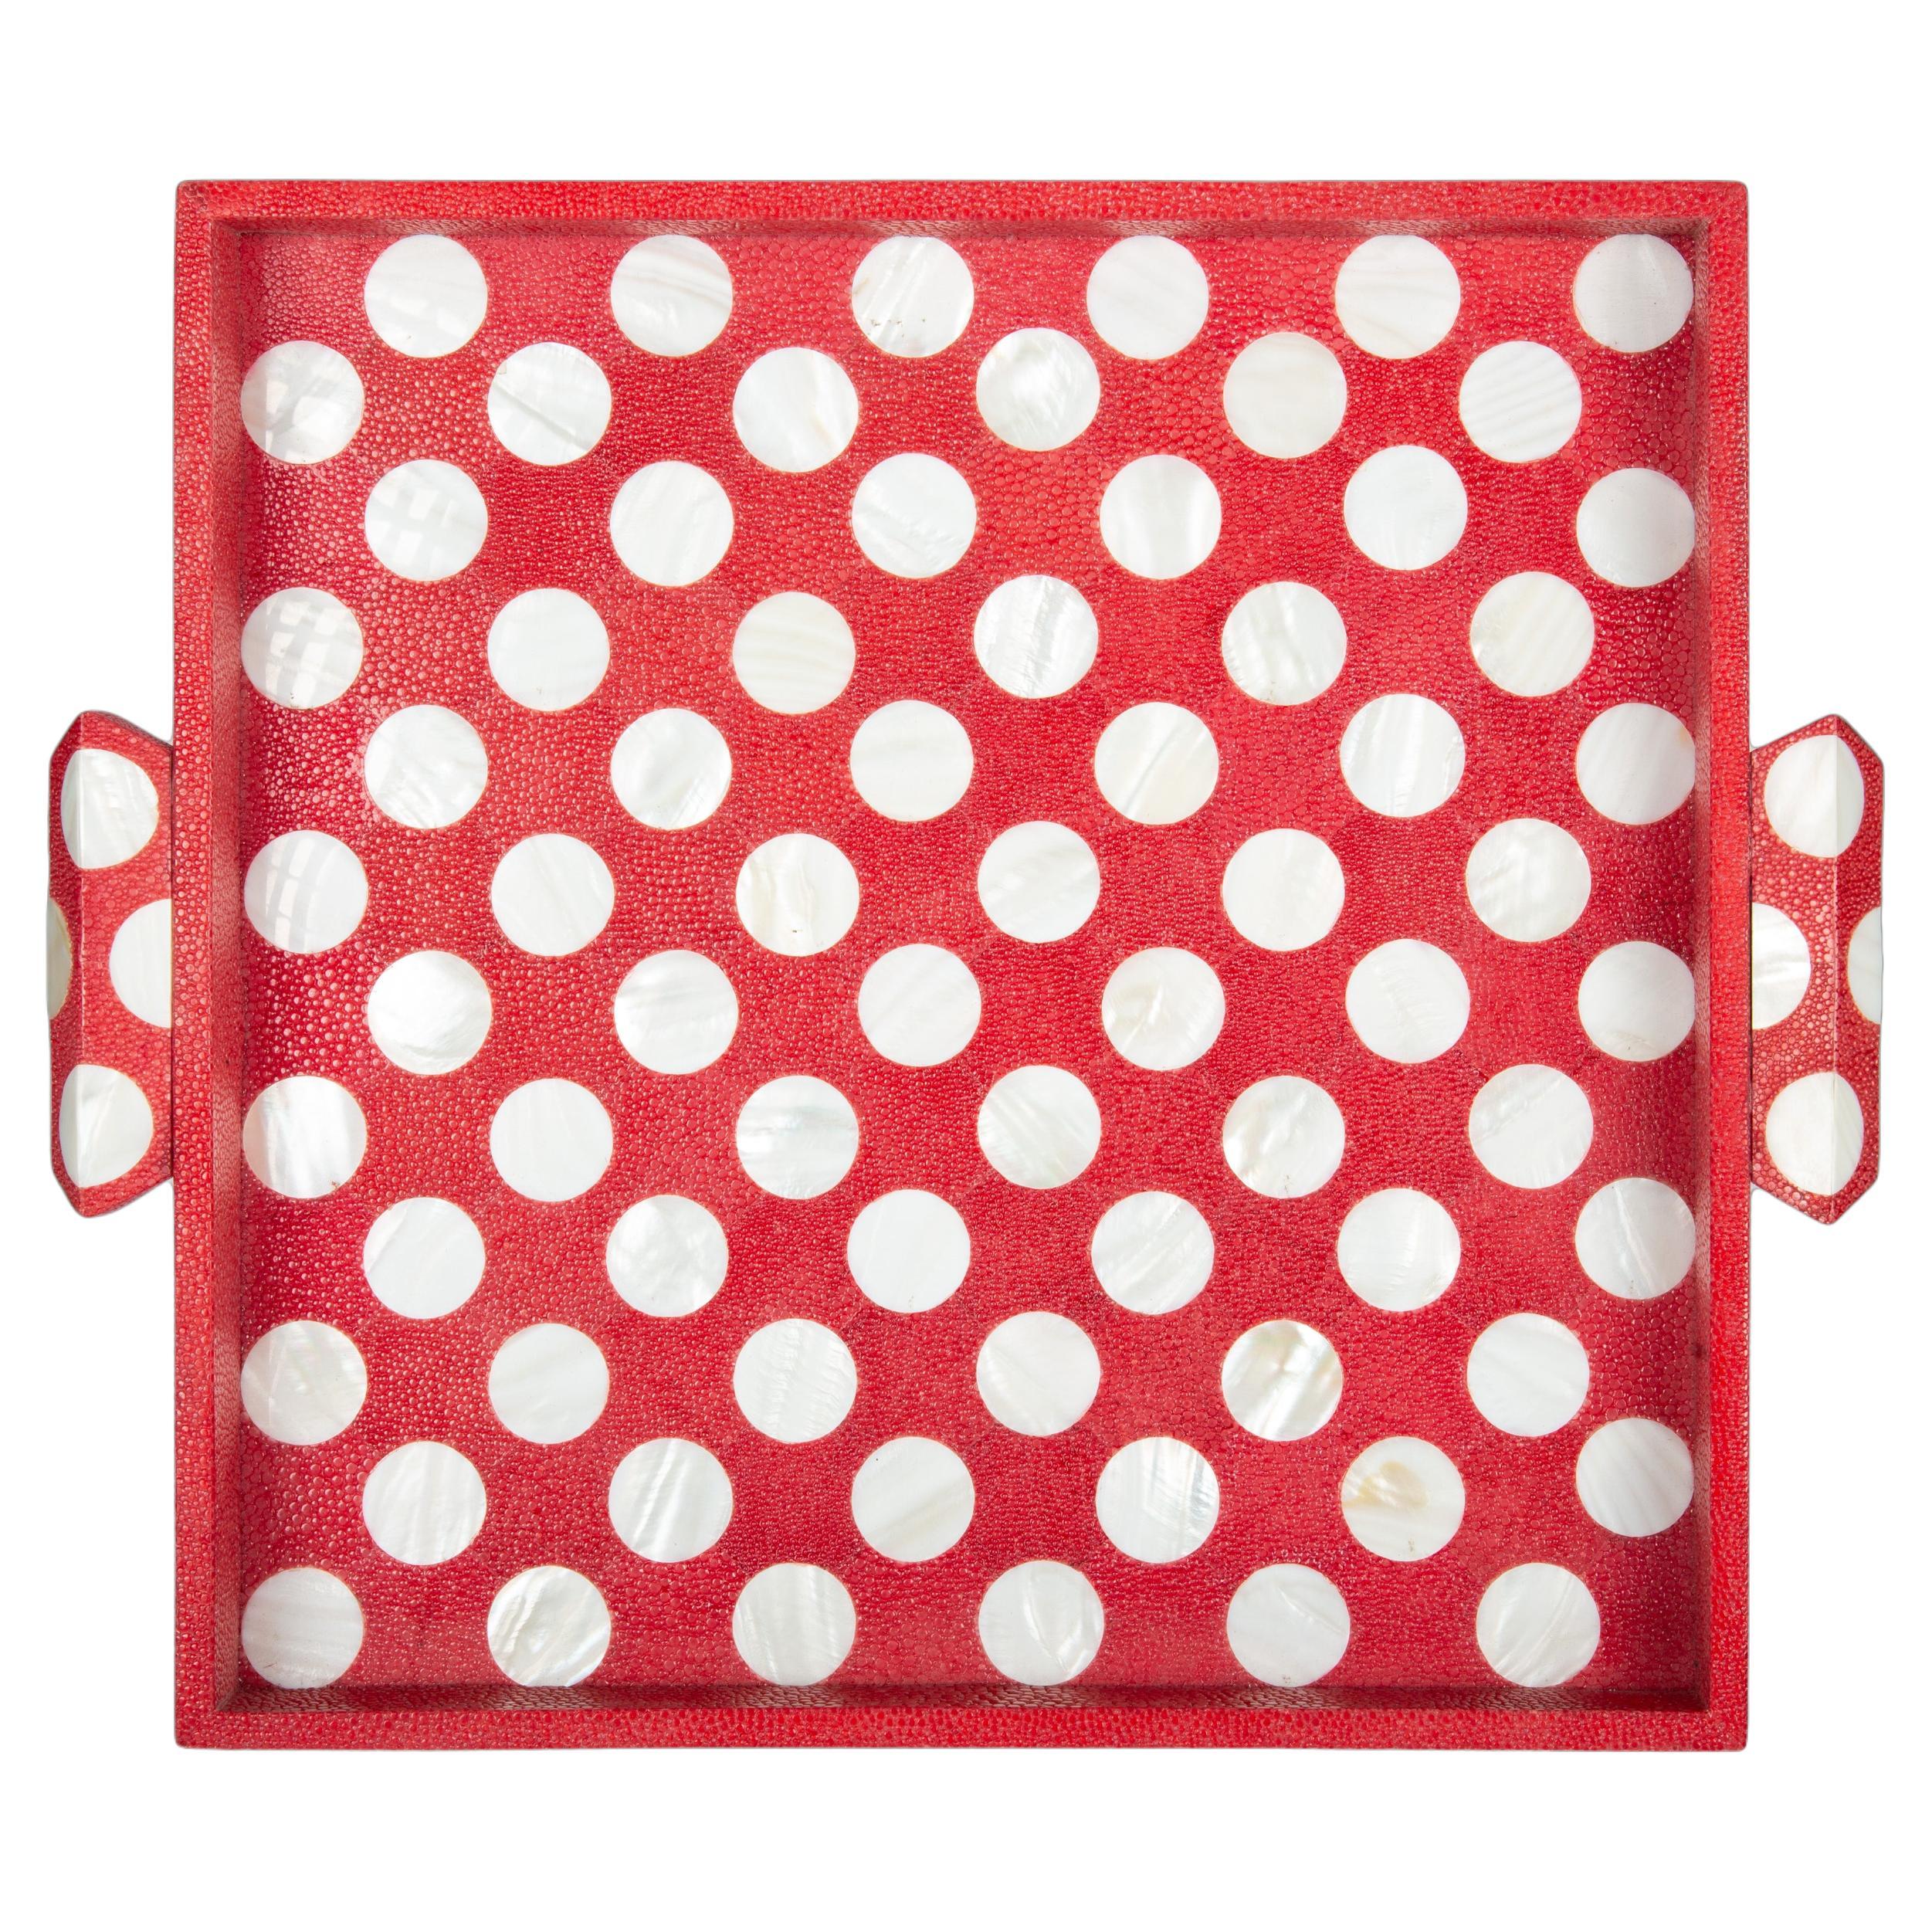 Quadratisches Tablett mit rotem Polka Dot, Chagrin und Perlmutt